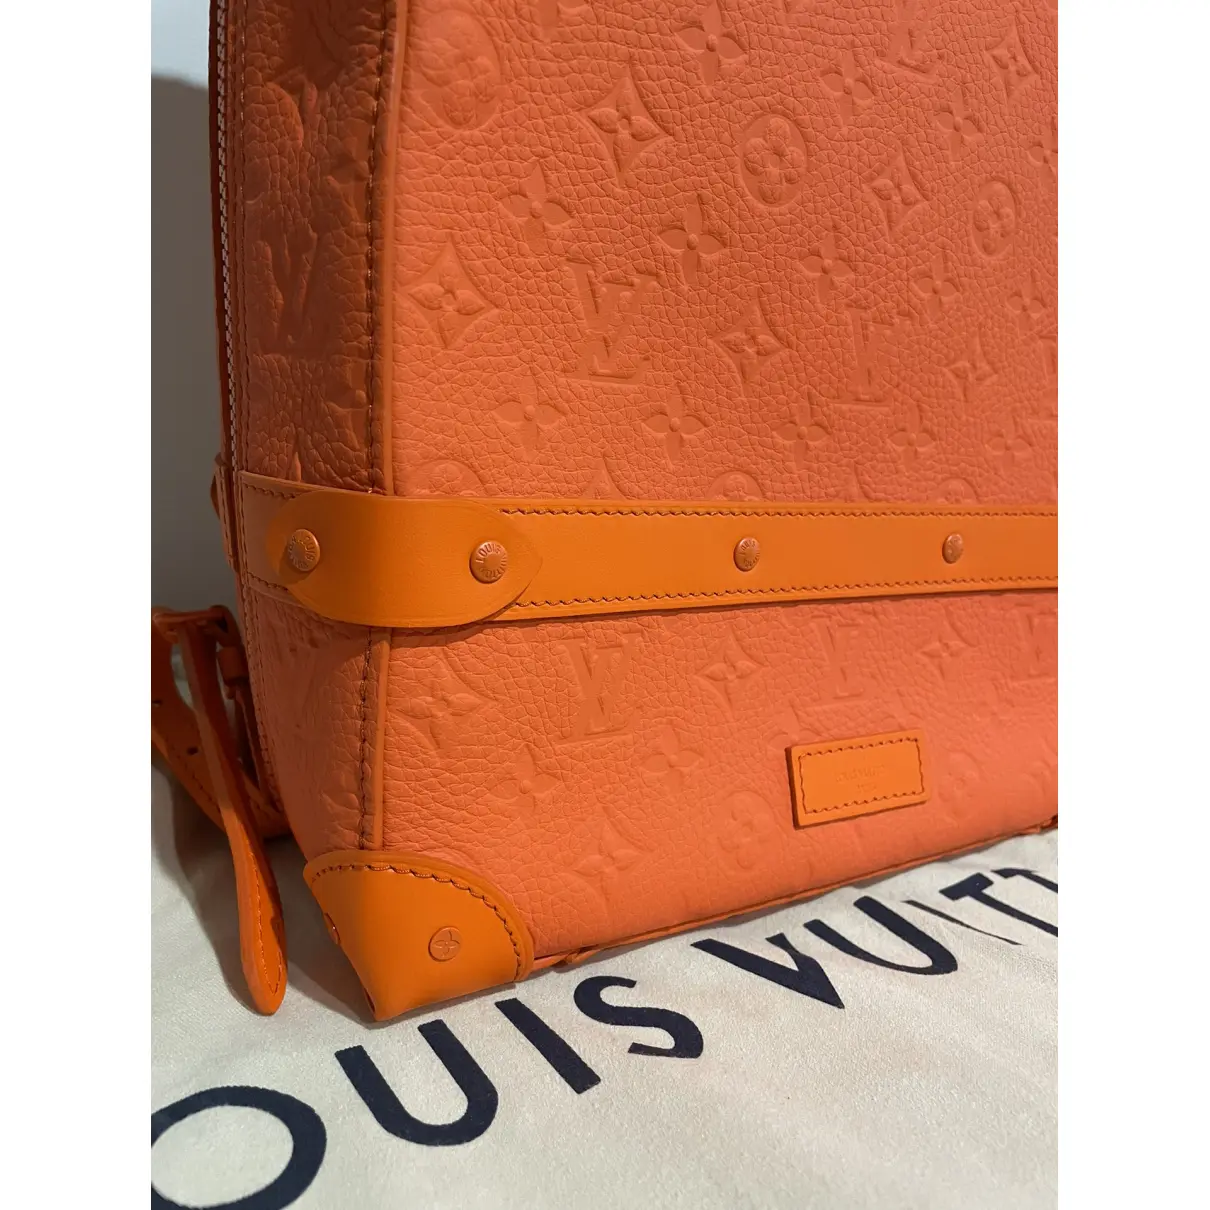 Buy Louis Vuitton Trunk leather bag online